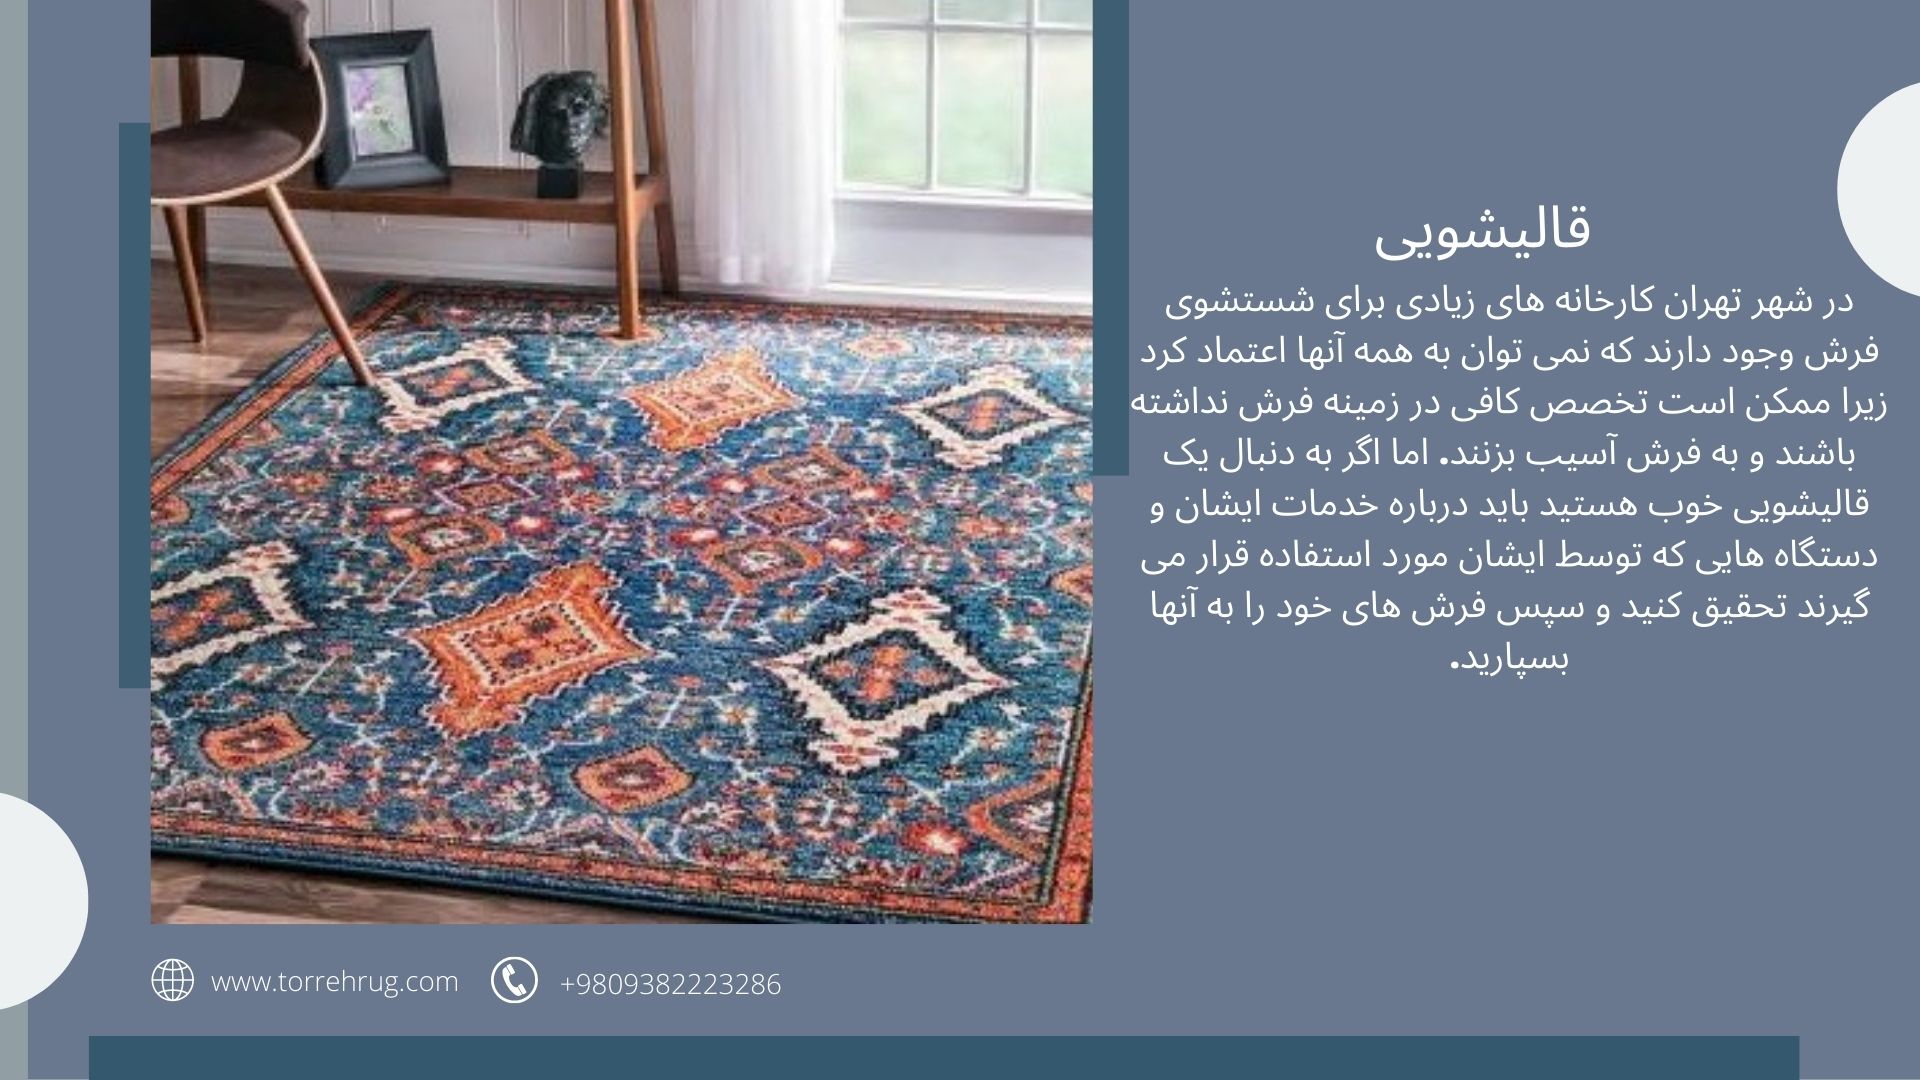 قالیشویی - قالیشویی طره